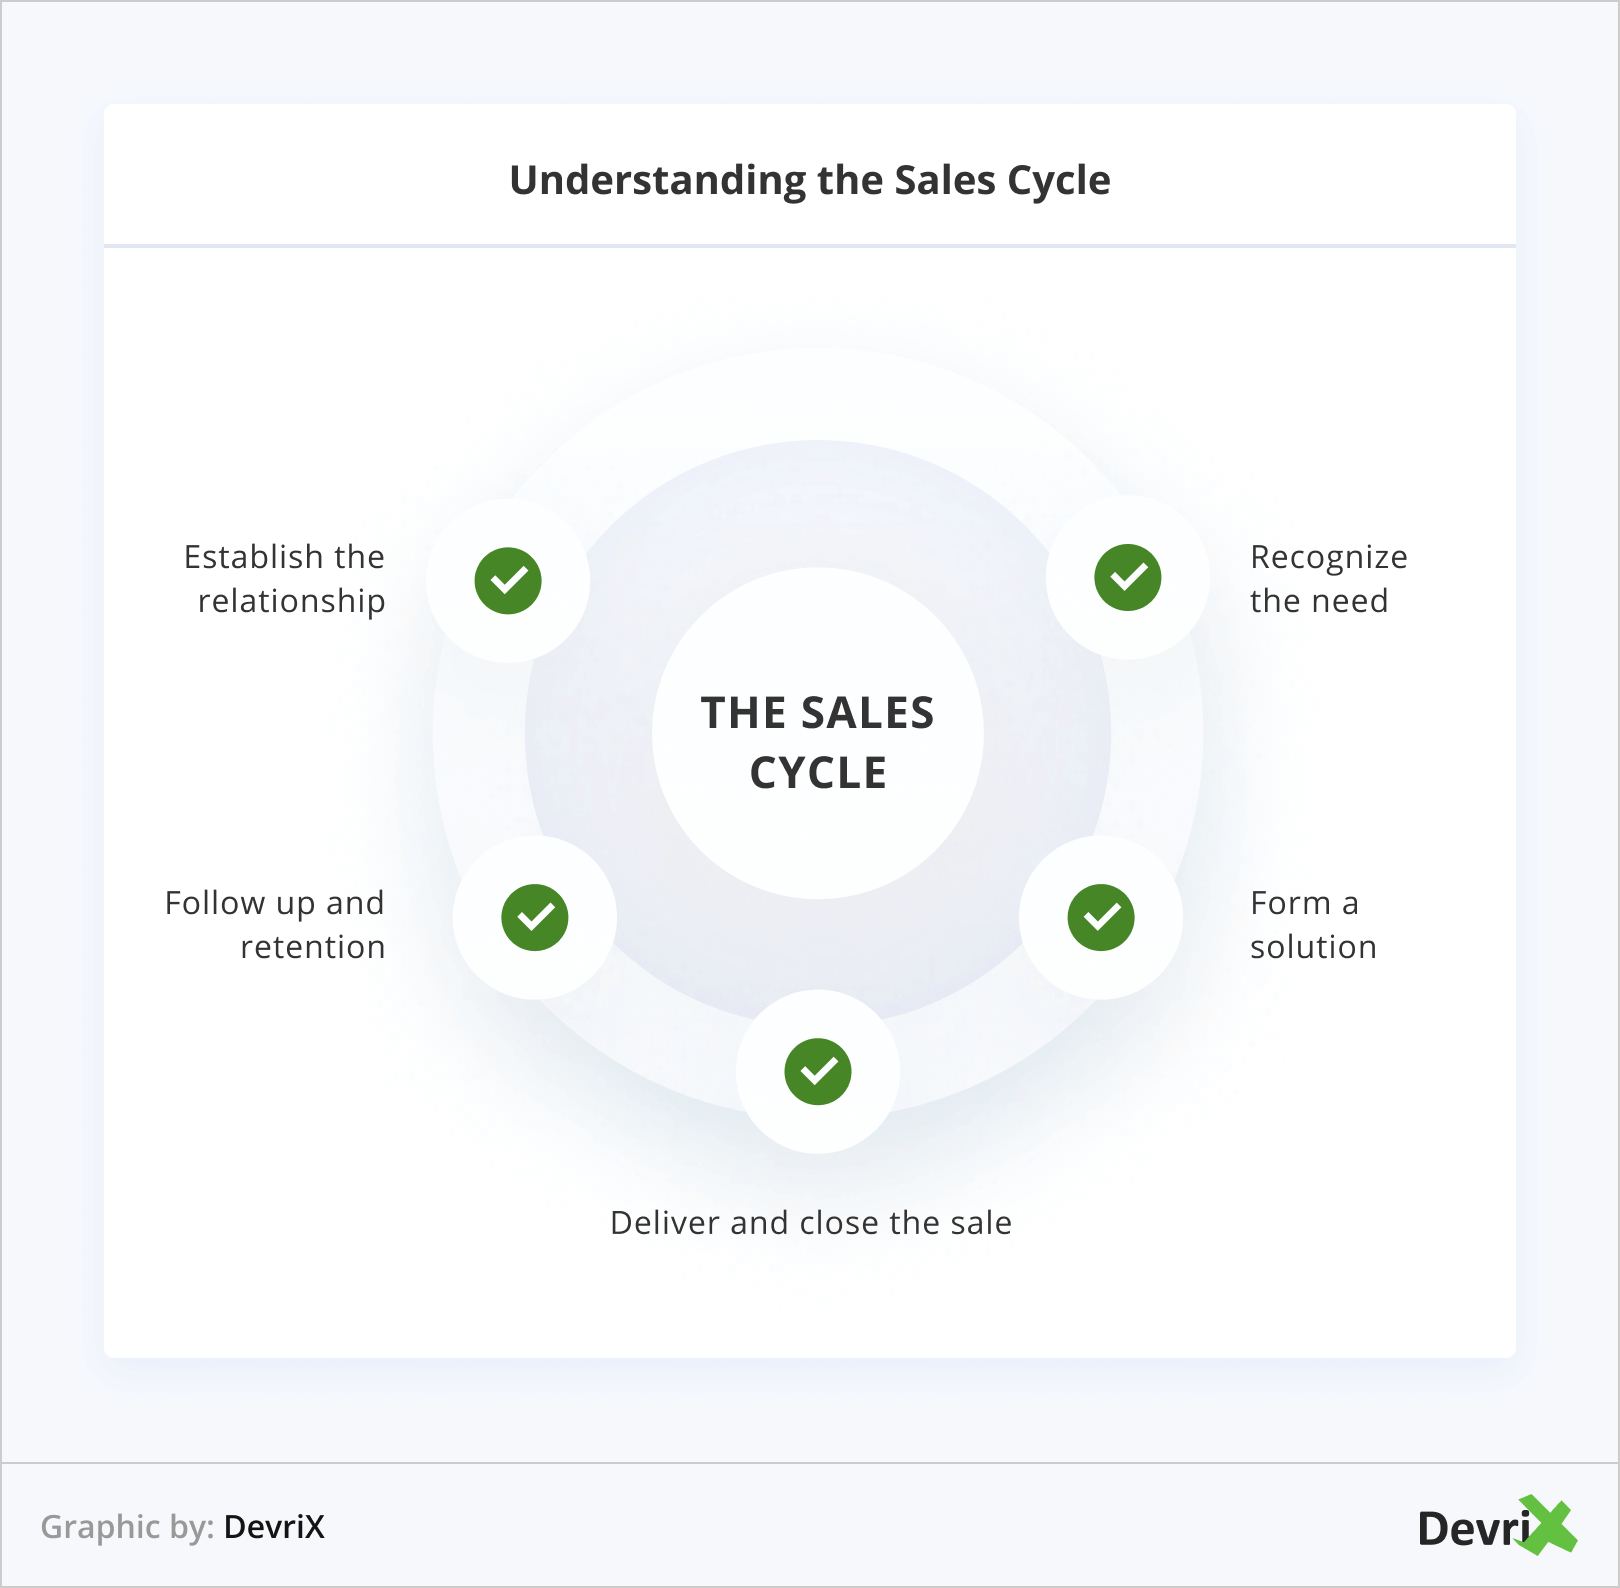 Understanding the Sales Cycle